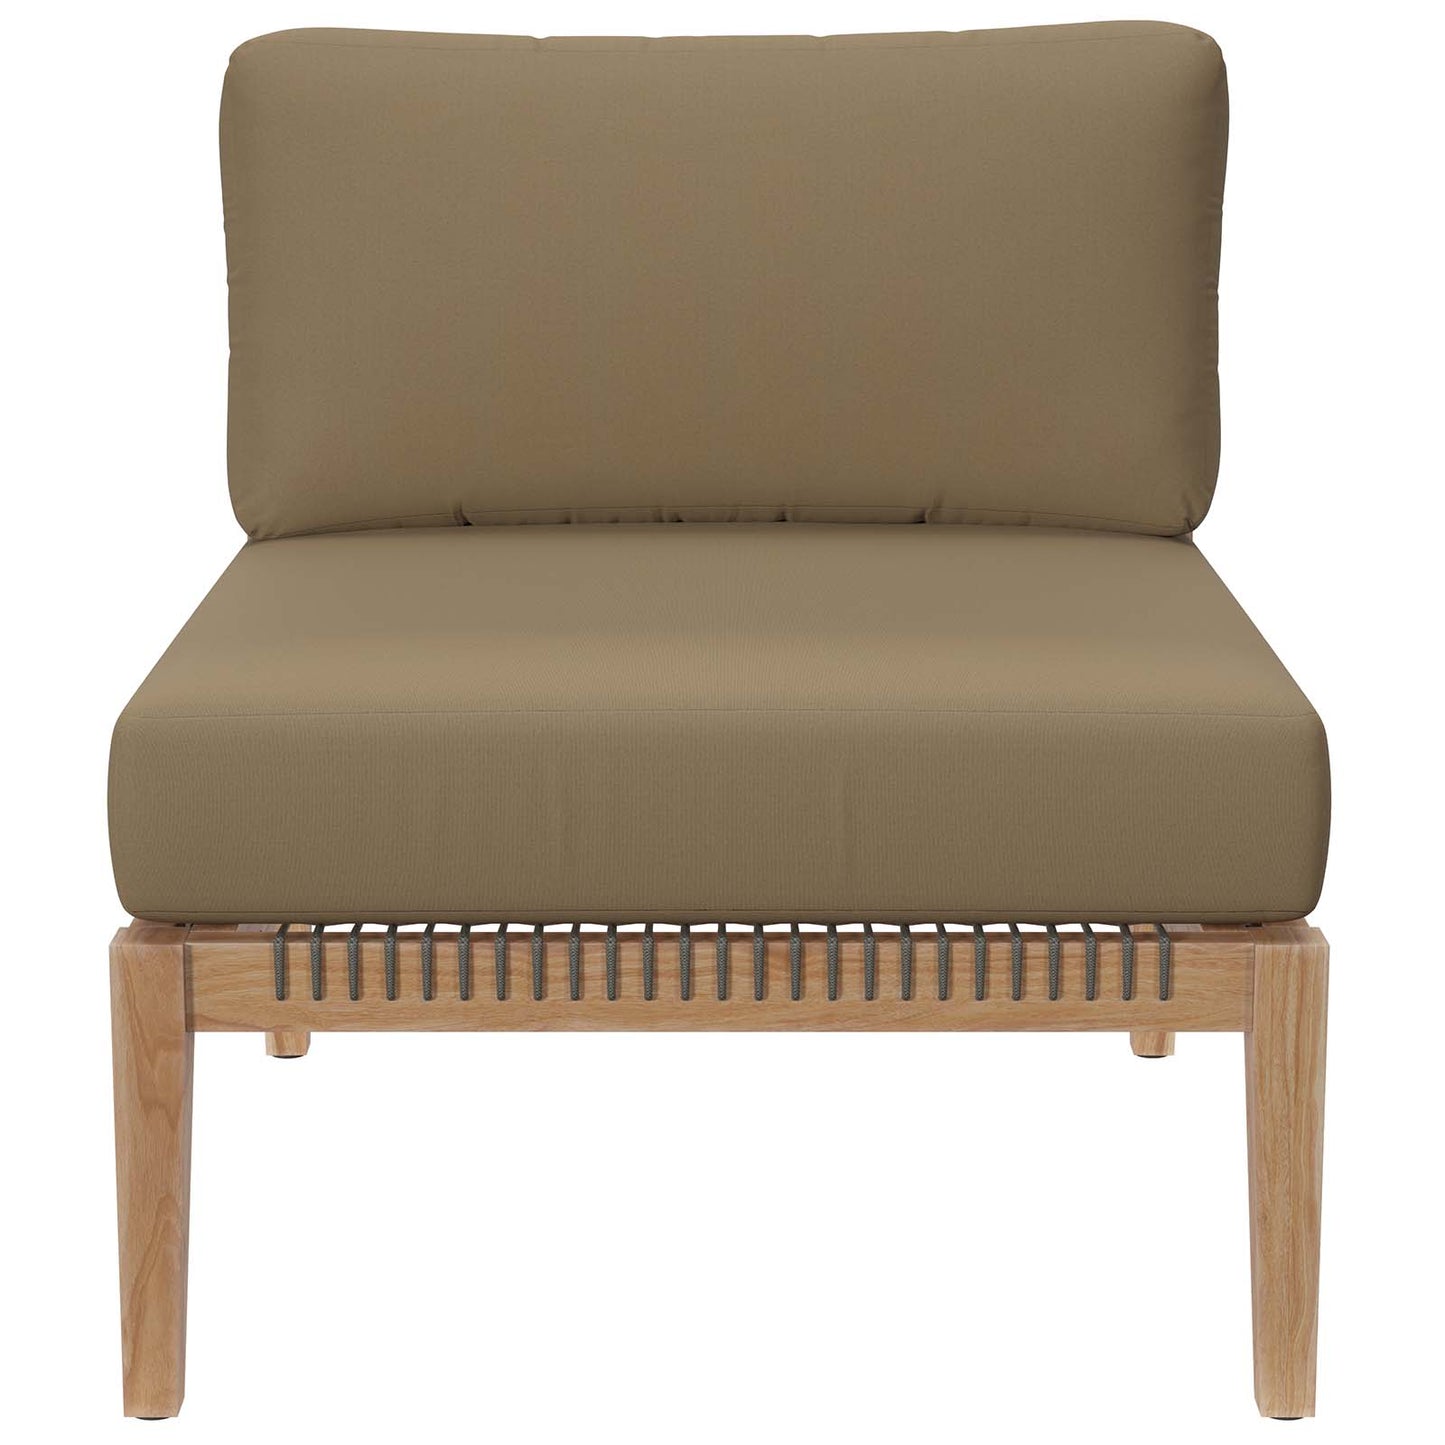 Clearwater Outdoor Patio Teak Wood Sofa Gray Light Brown EEI-6120-GRY-LBR